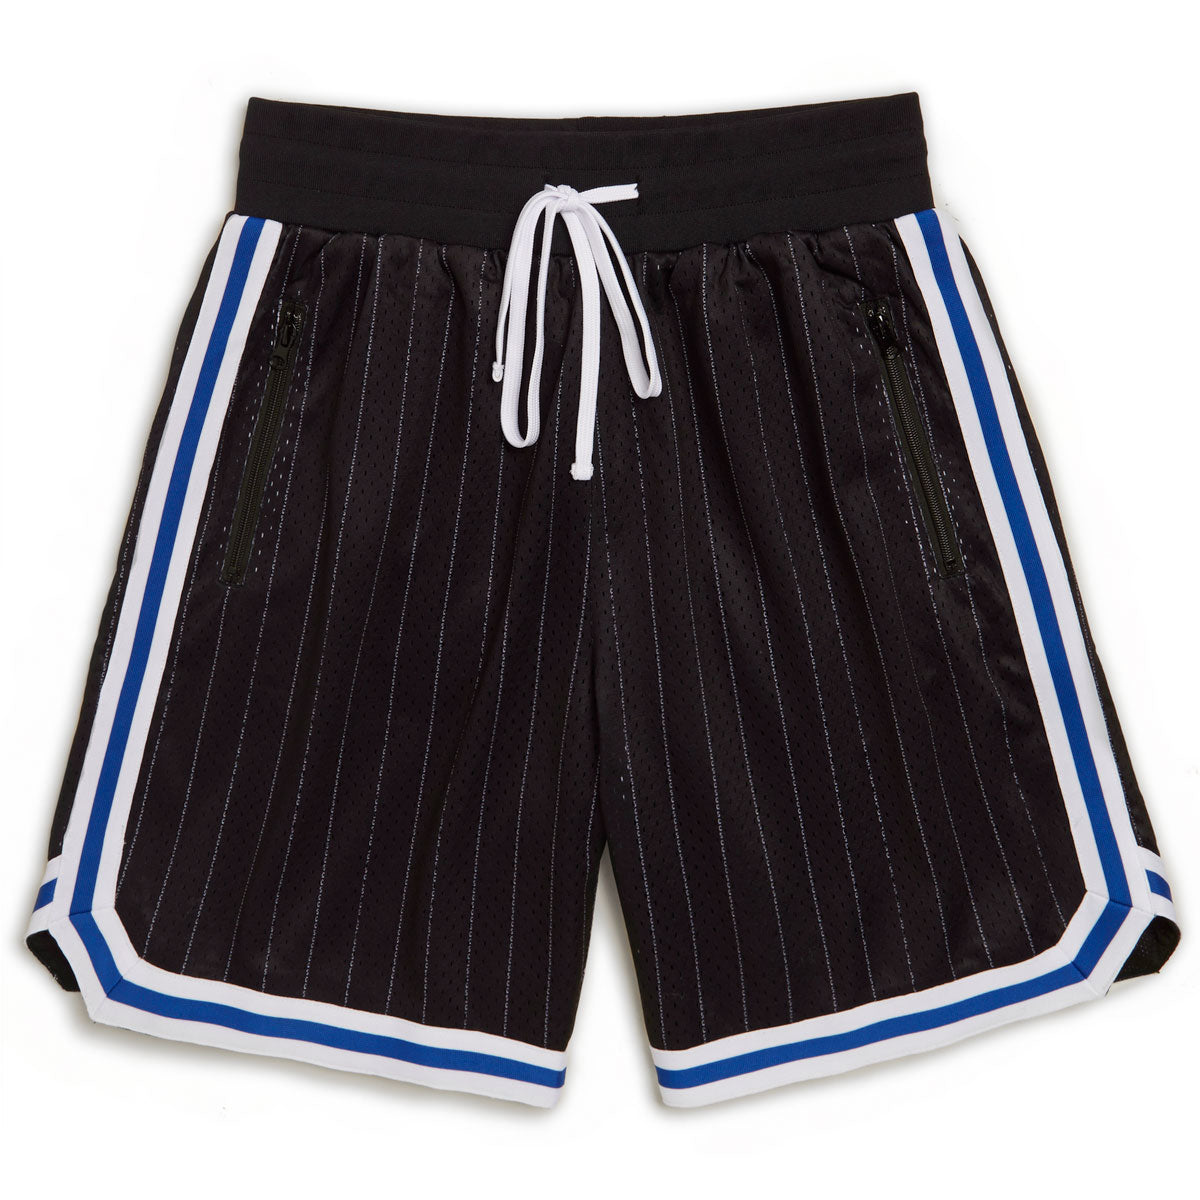 CCS Crossover Basketball Shorts - Black/Blue image 1